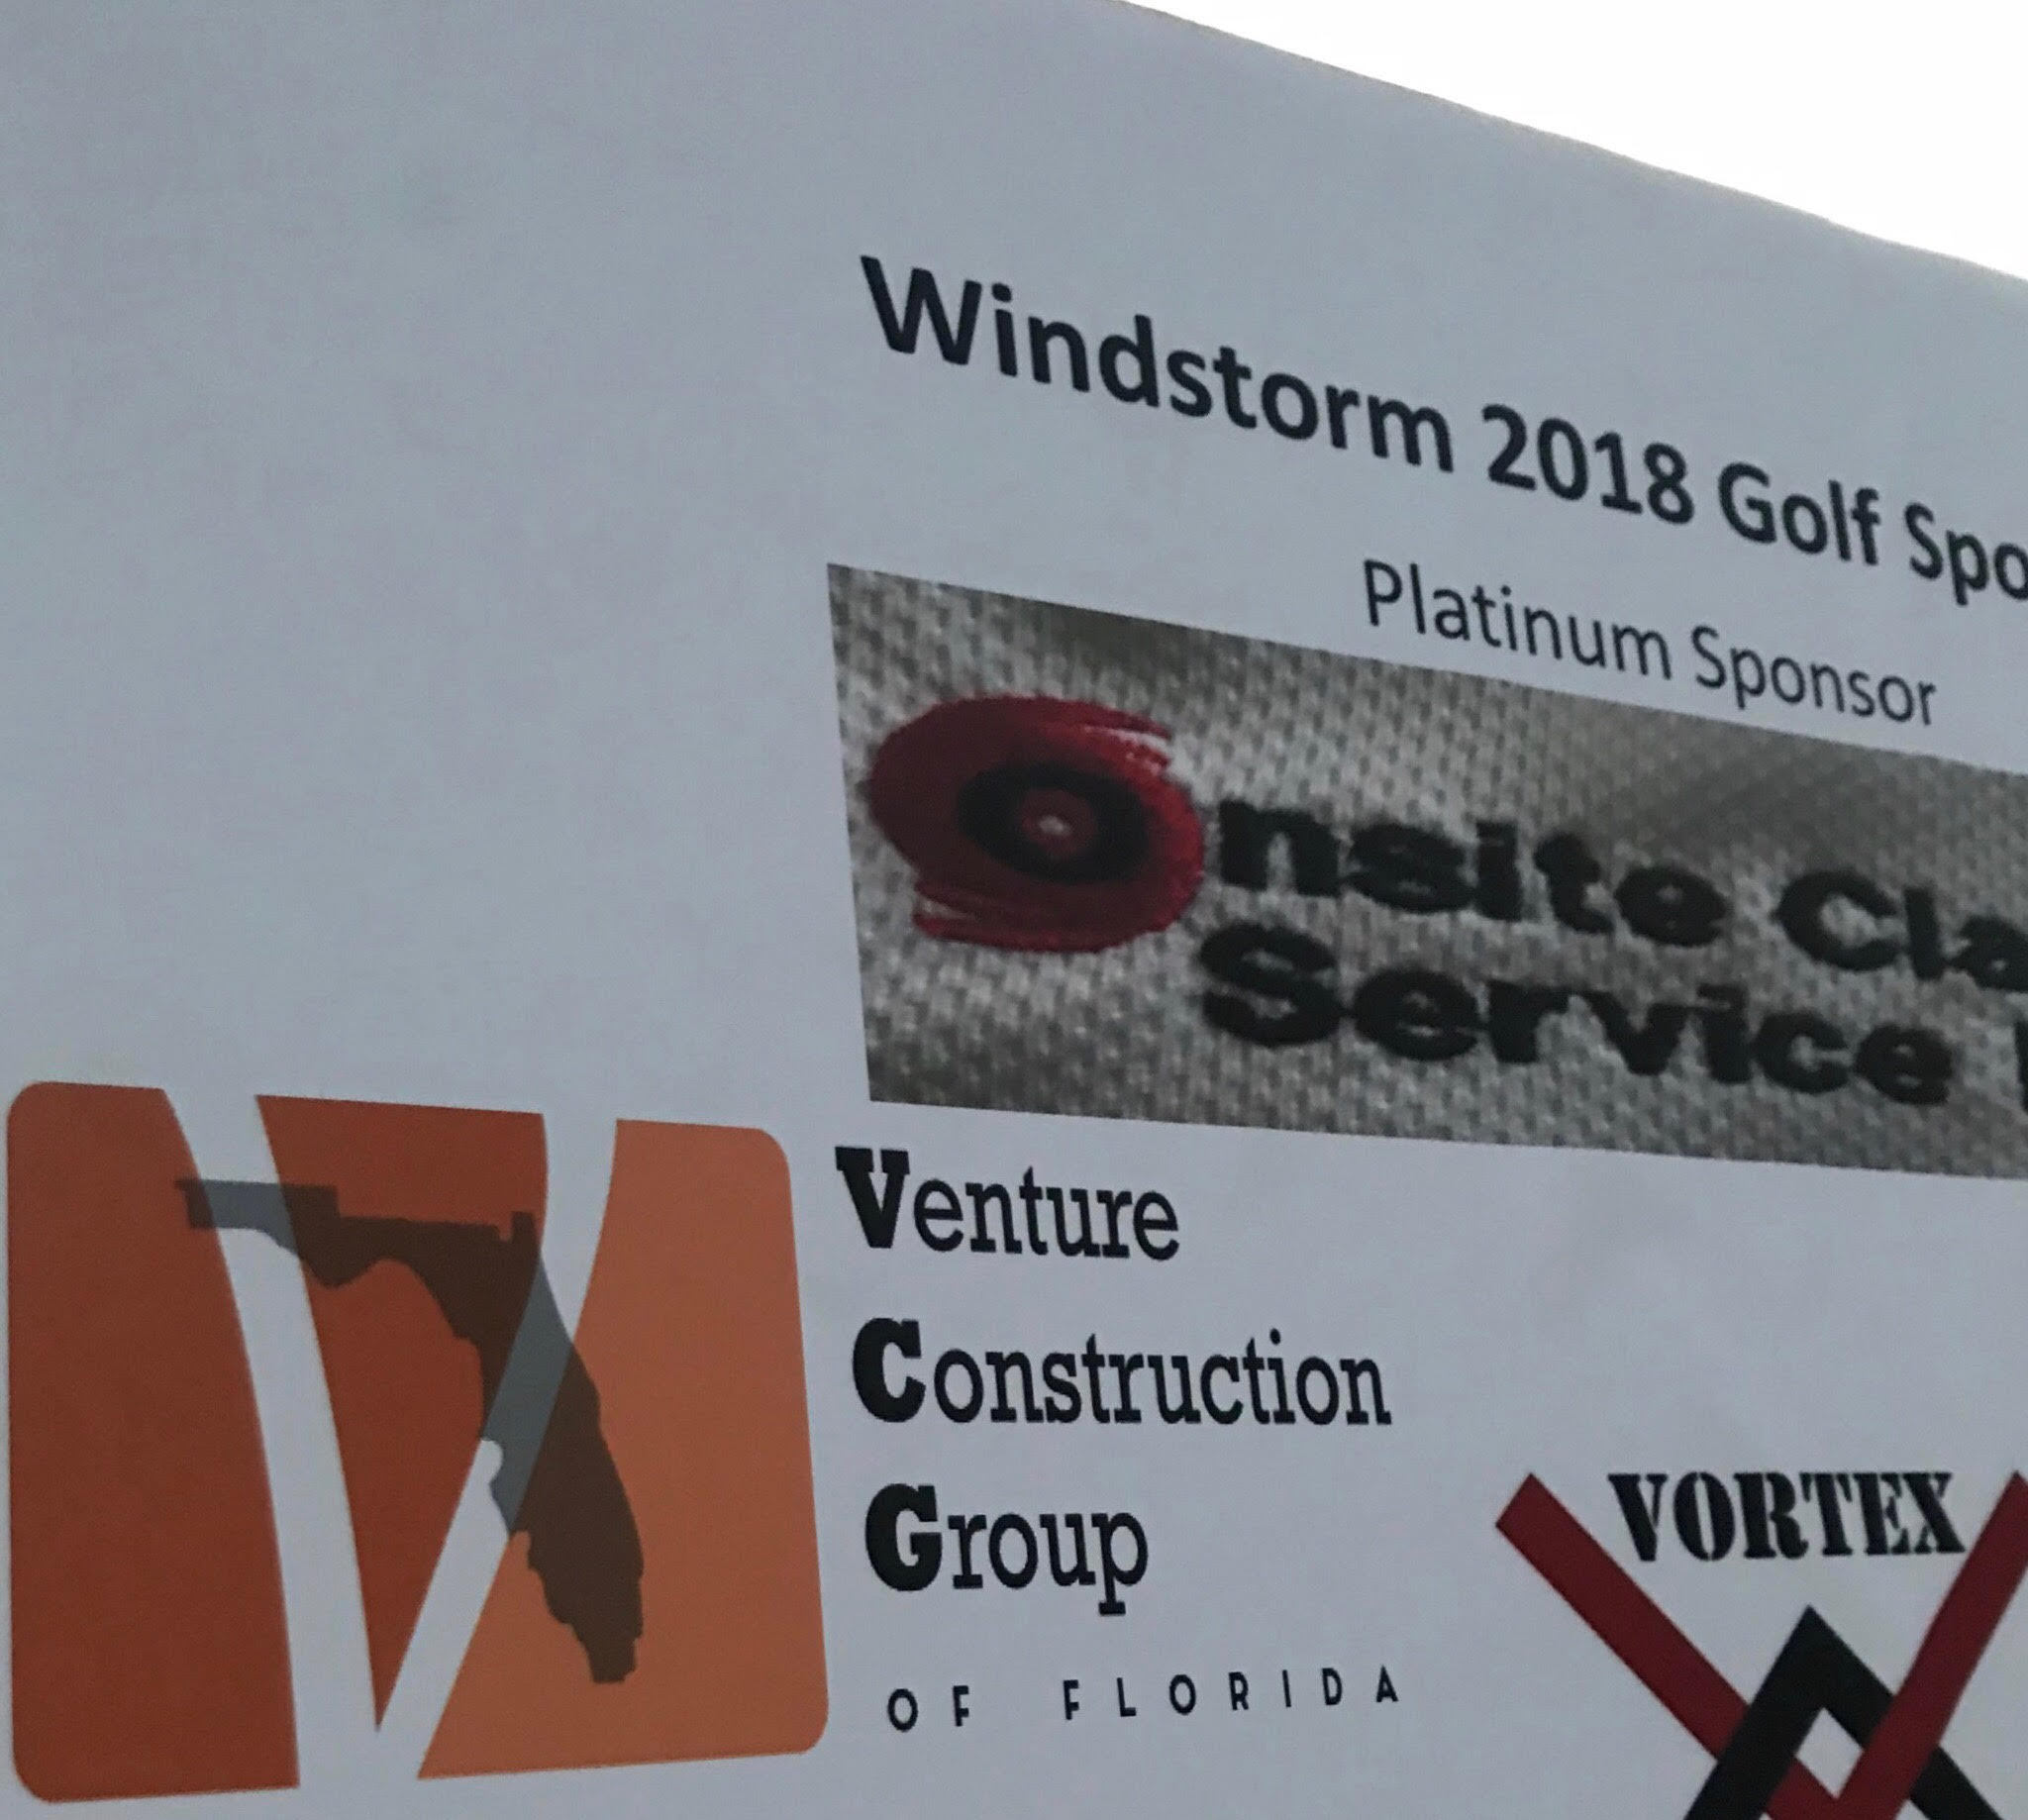 Venture Construction Group of Florida: WindStorm Insurance Conference Golf Tournament Sponsor